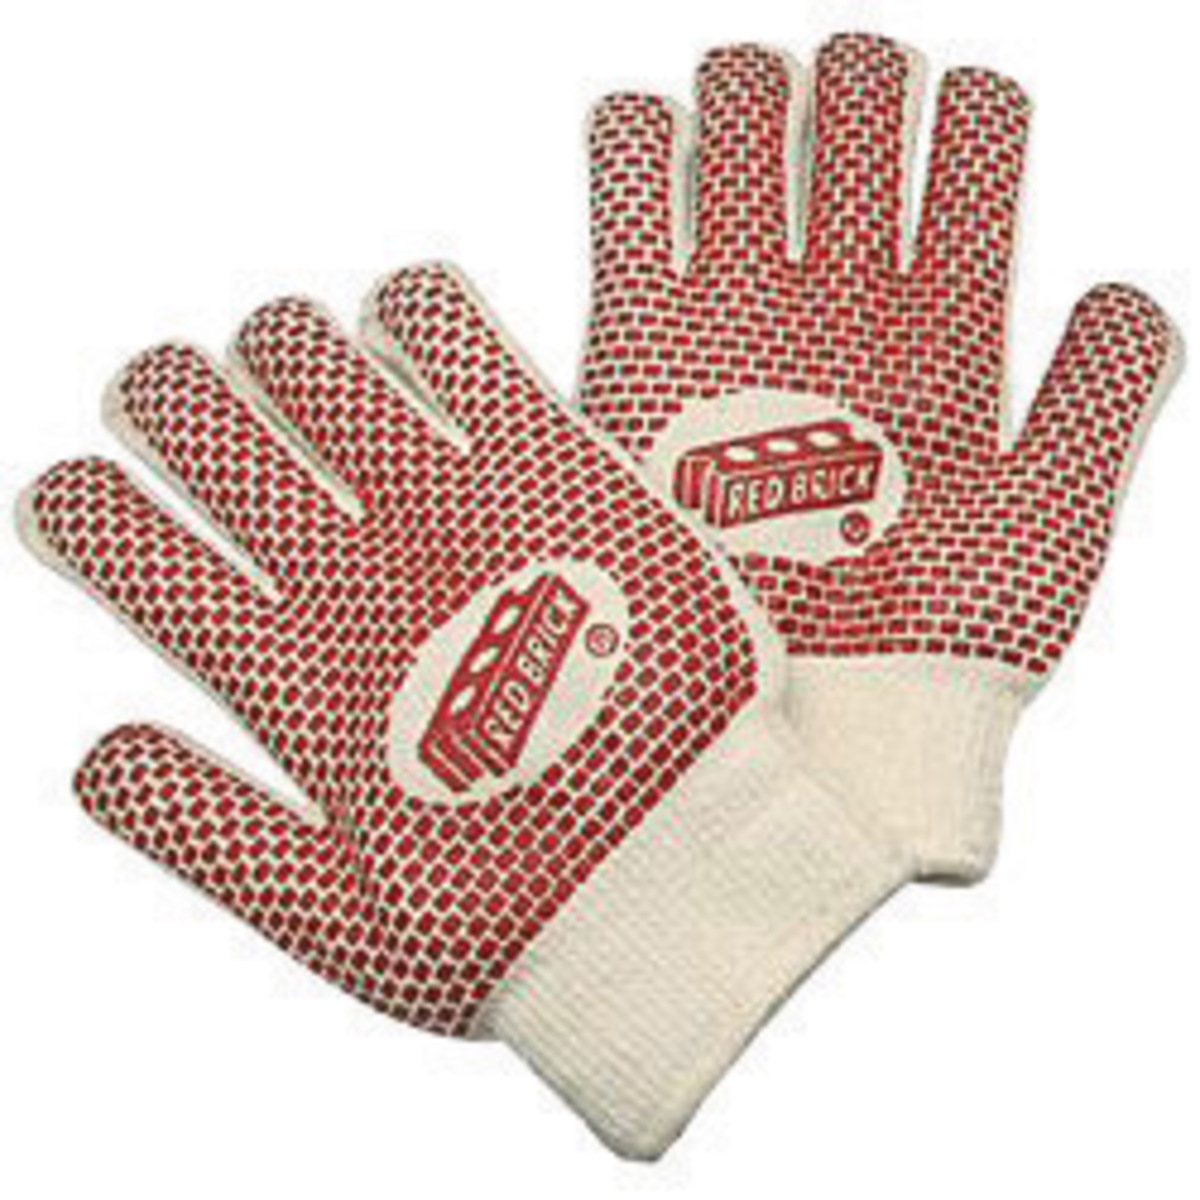 Heat resistant gloves for sale online